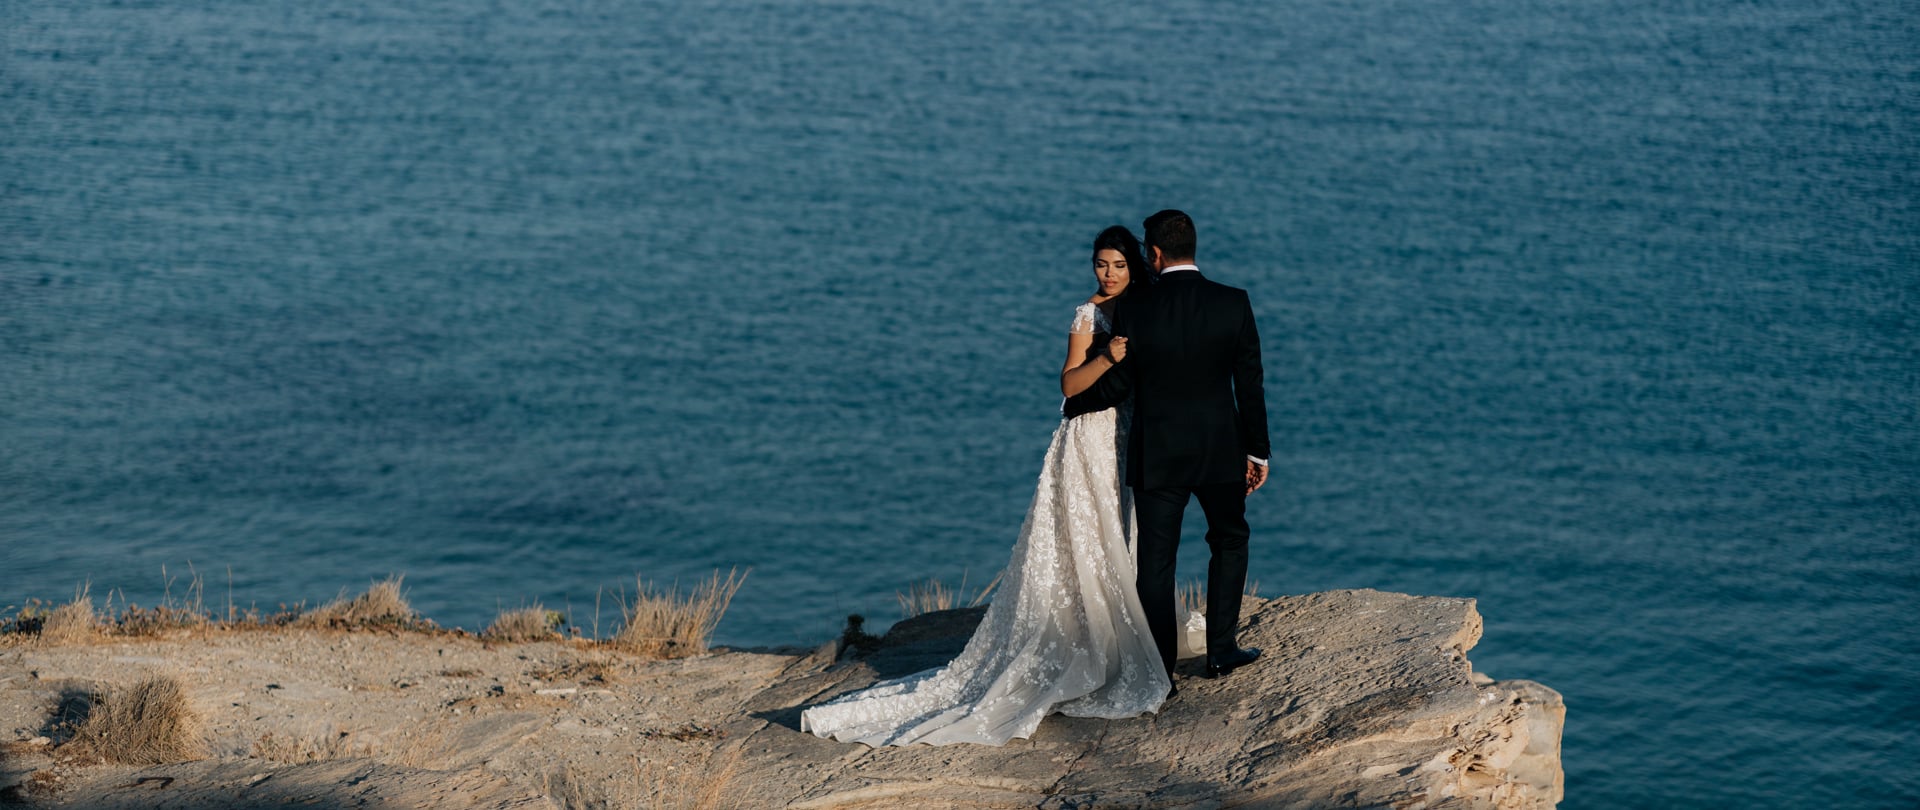 Maryed & Nick Wedding Video Filmed at Paros, Greece